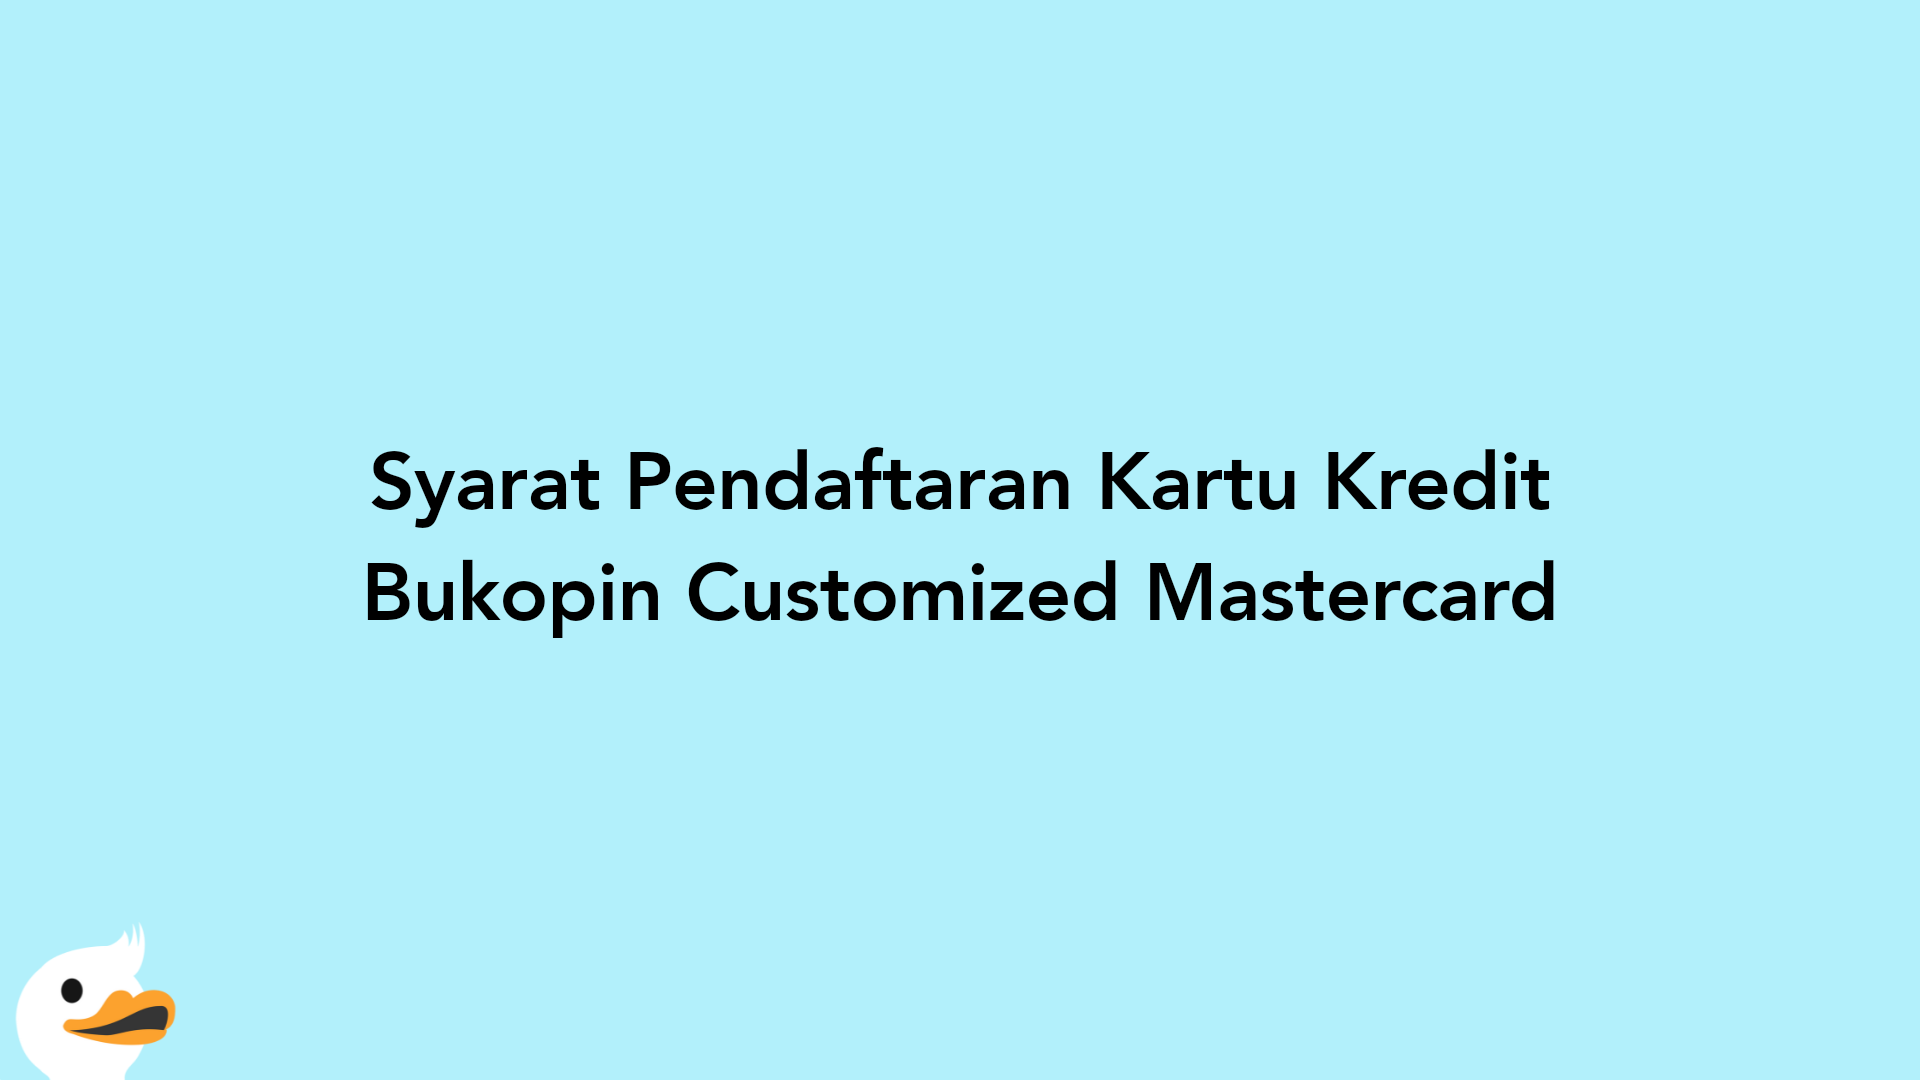 Syarat Pendaftaran Kartu Kredit Bukopin Customized Mastercard